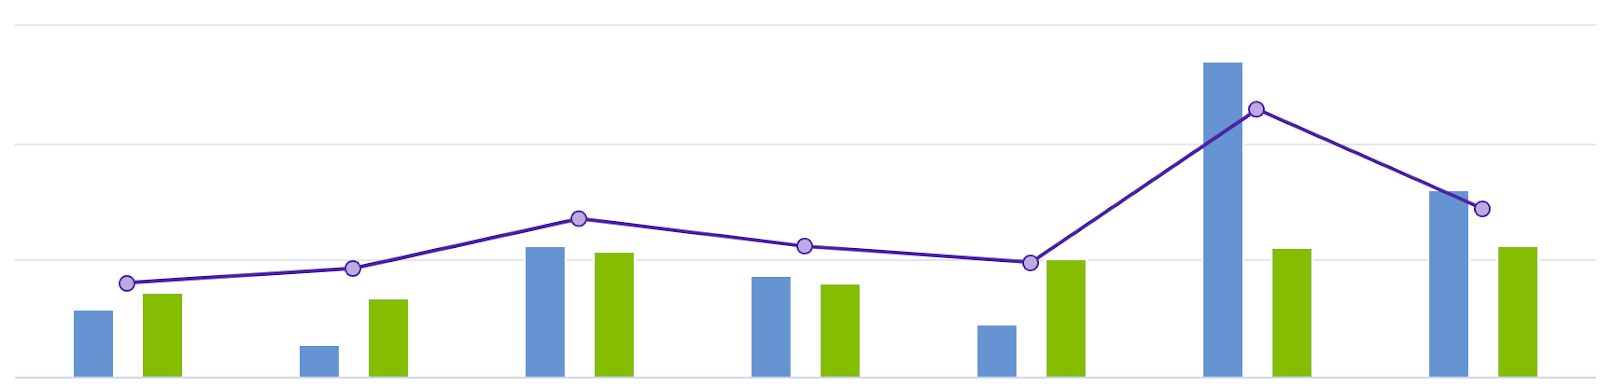 ActBlue bar graph -- donations falling!